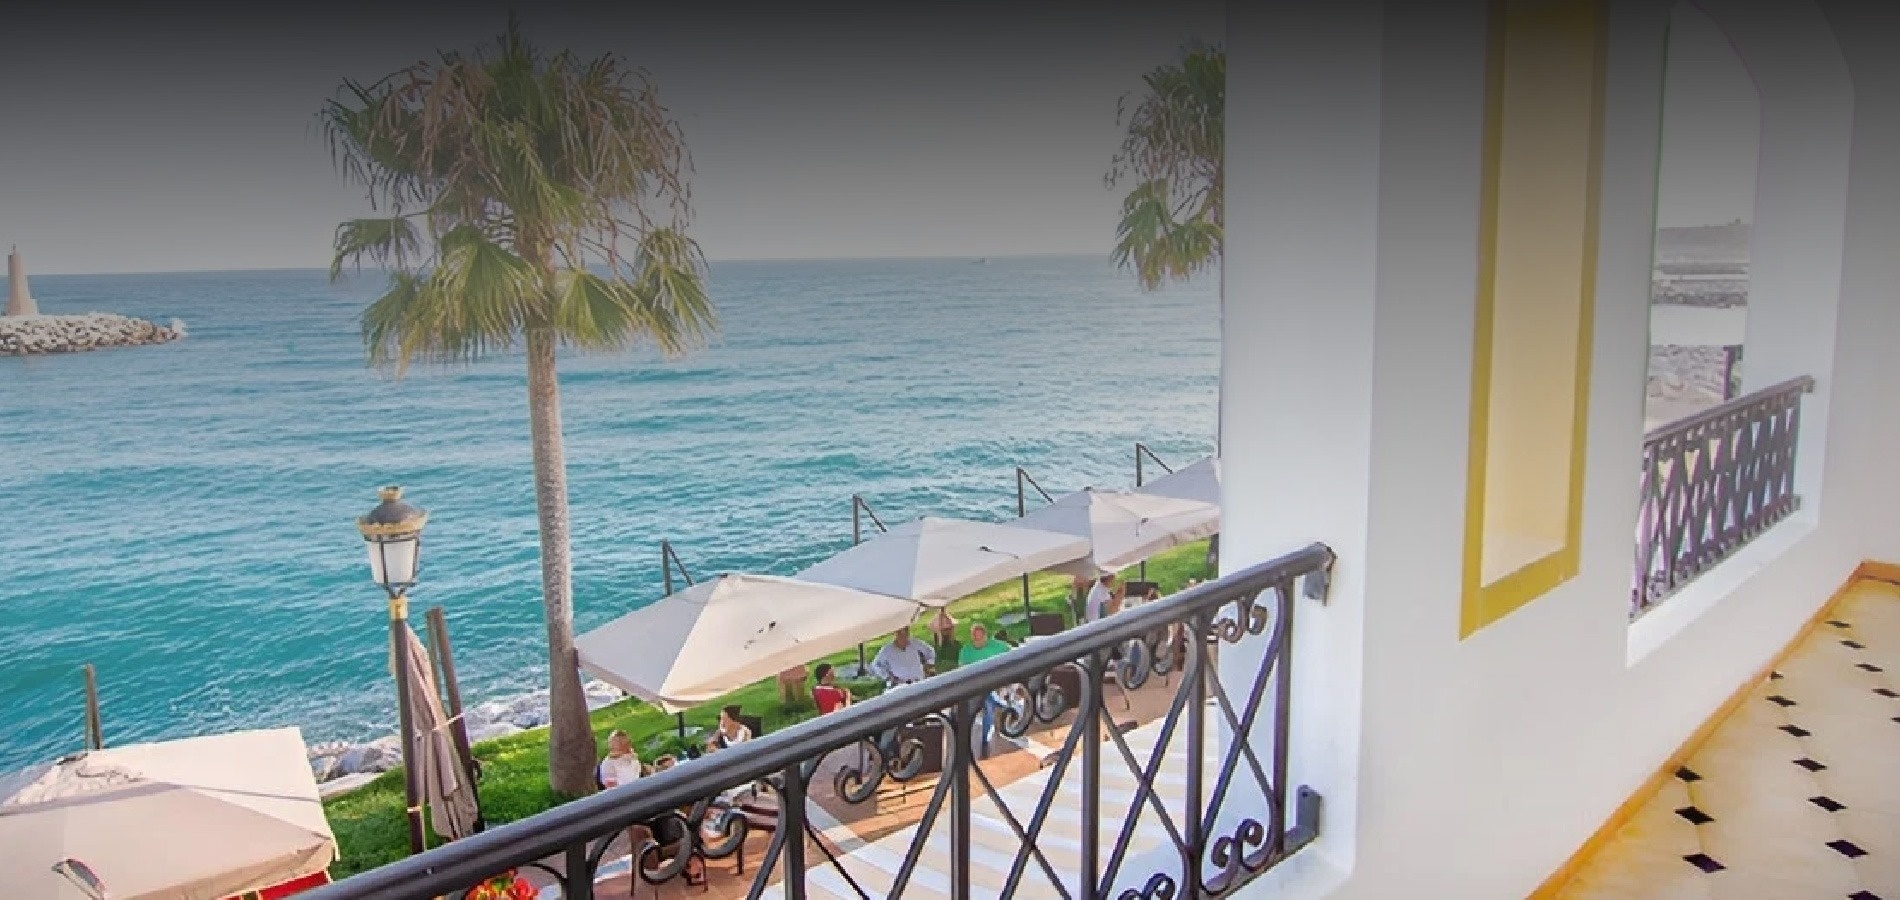 dos tumbonas blancas en un balcón con vistas al océano